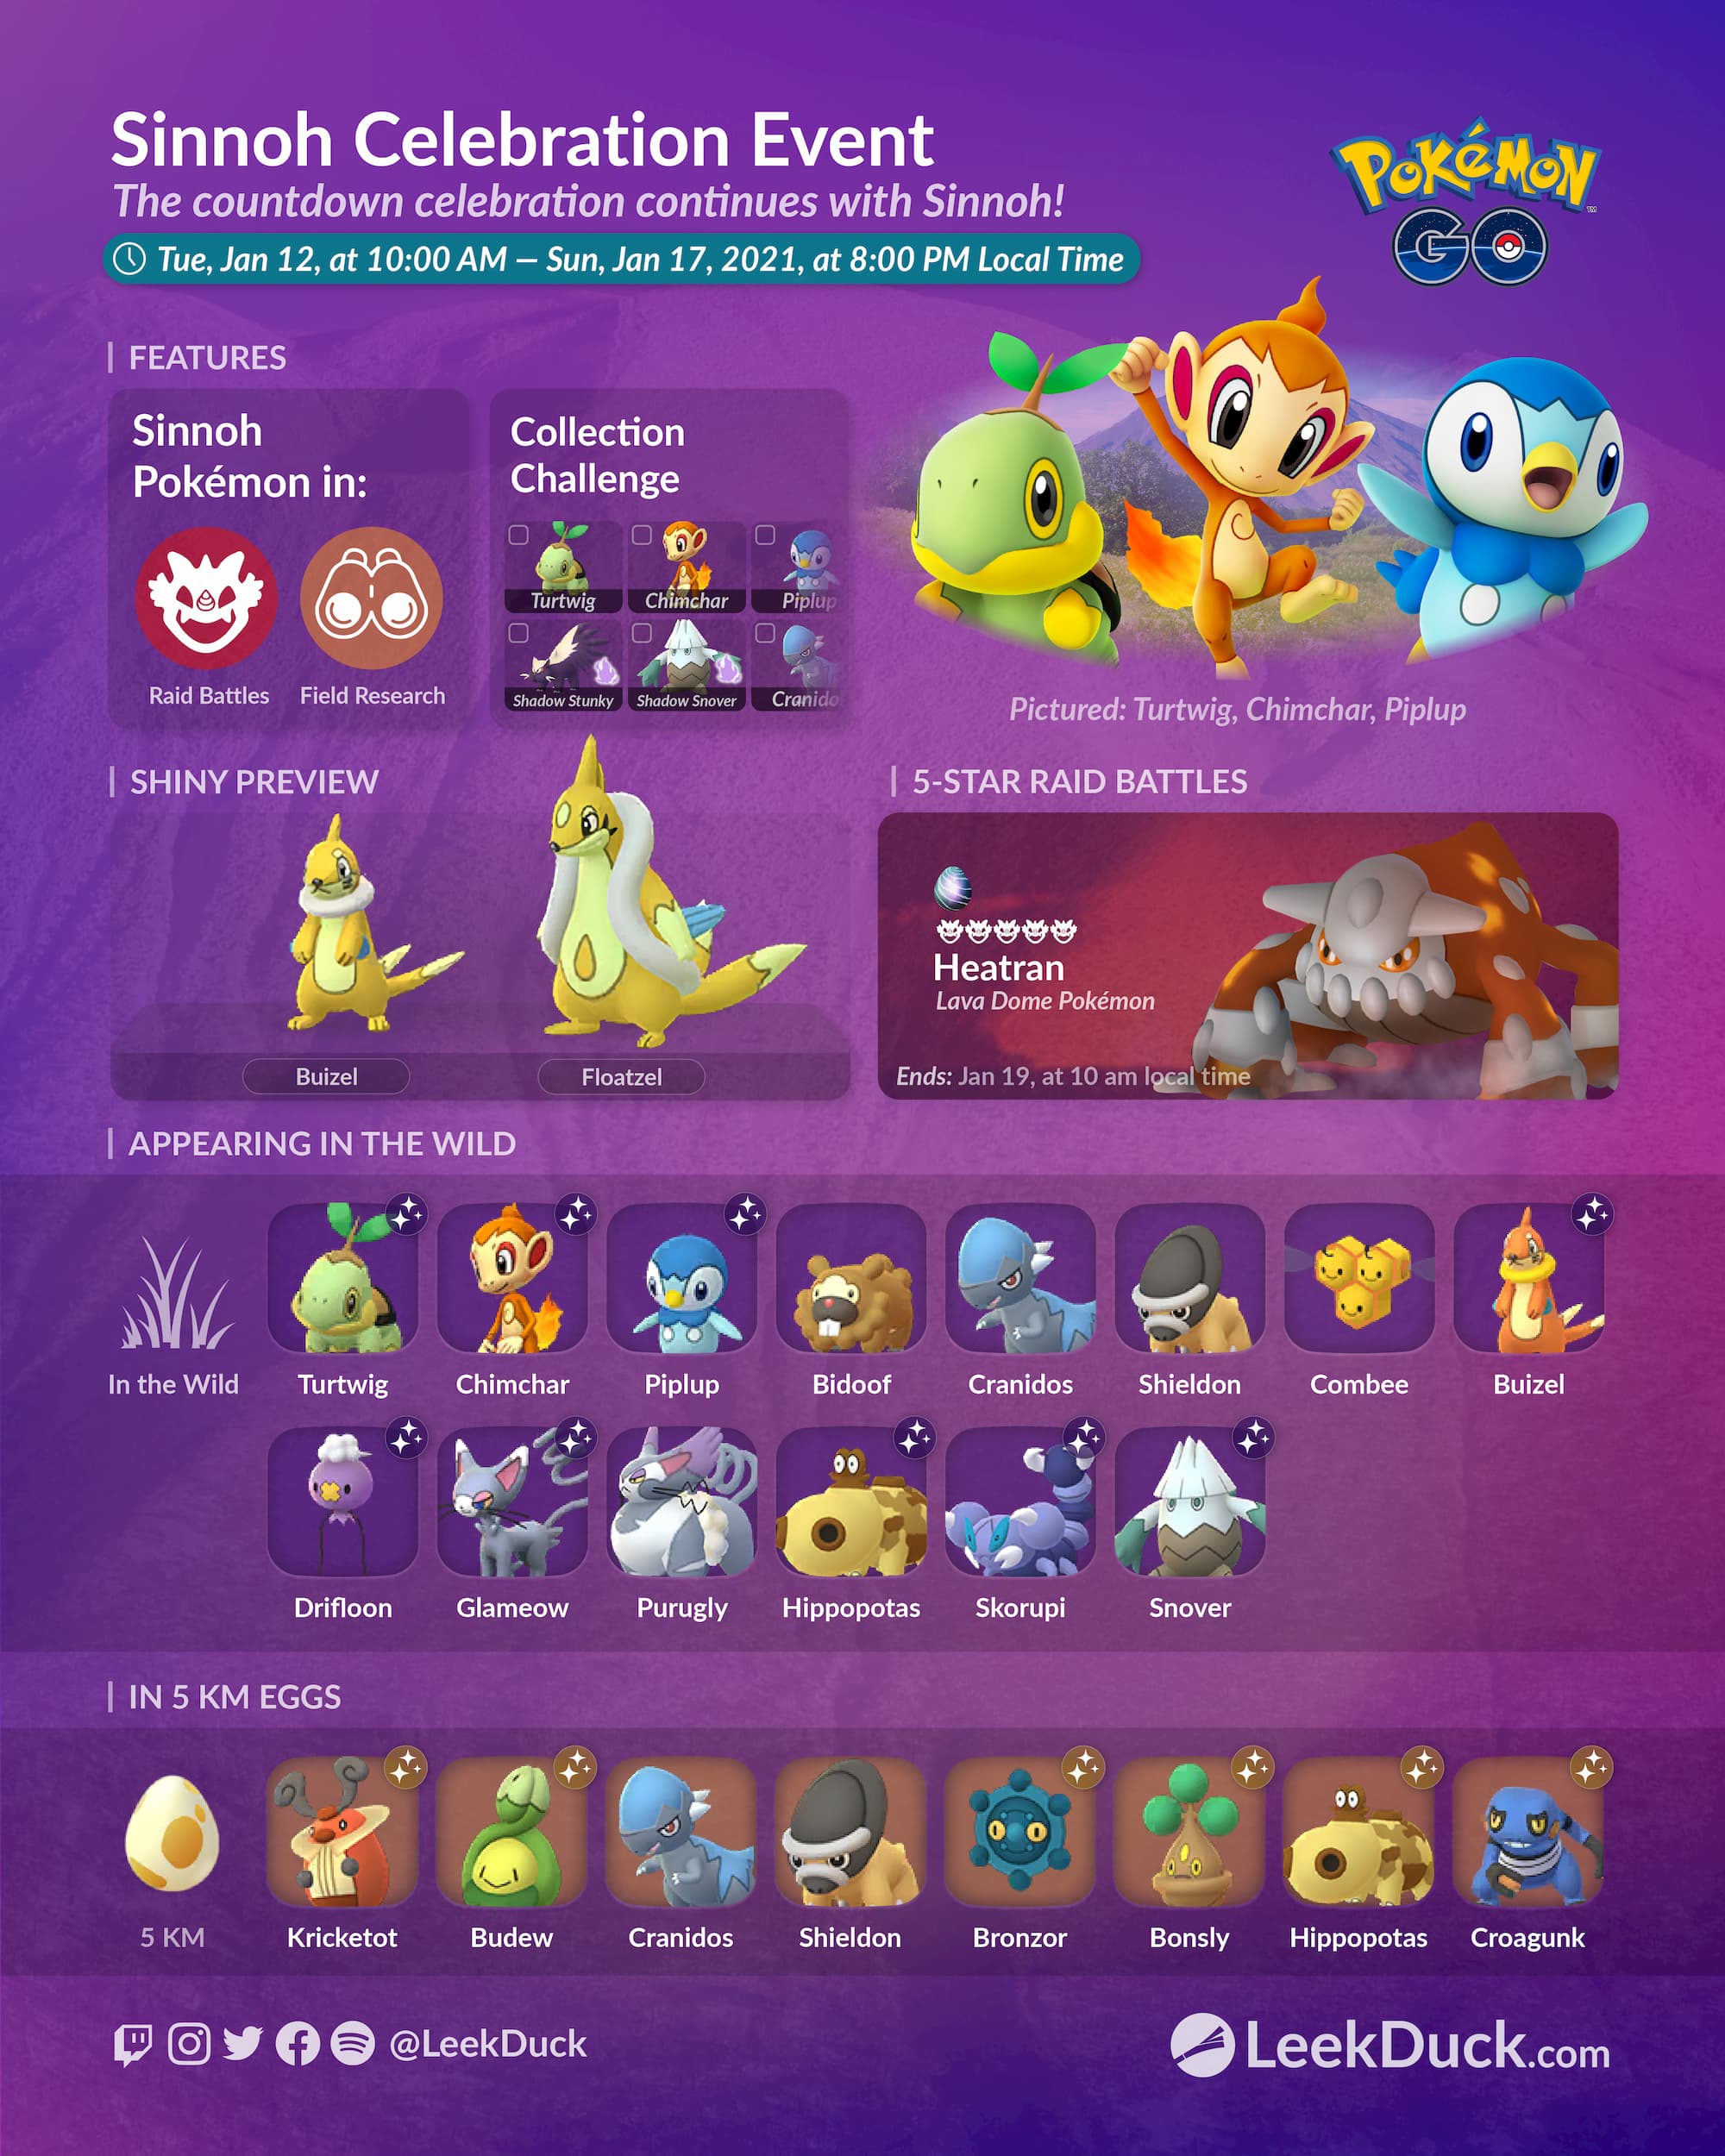 Sinnoh Celebration Event Leek Duck Pokémon GO News and Resources